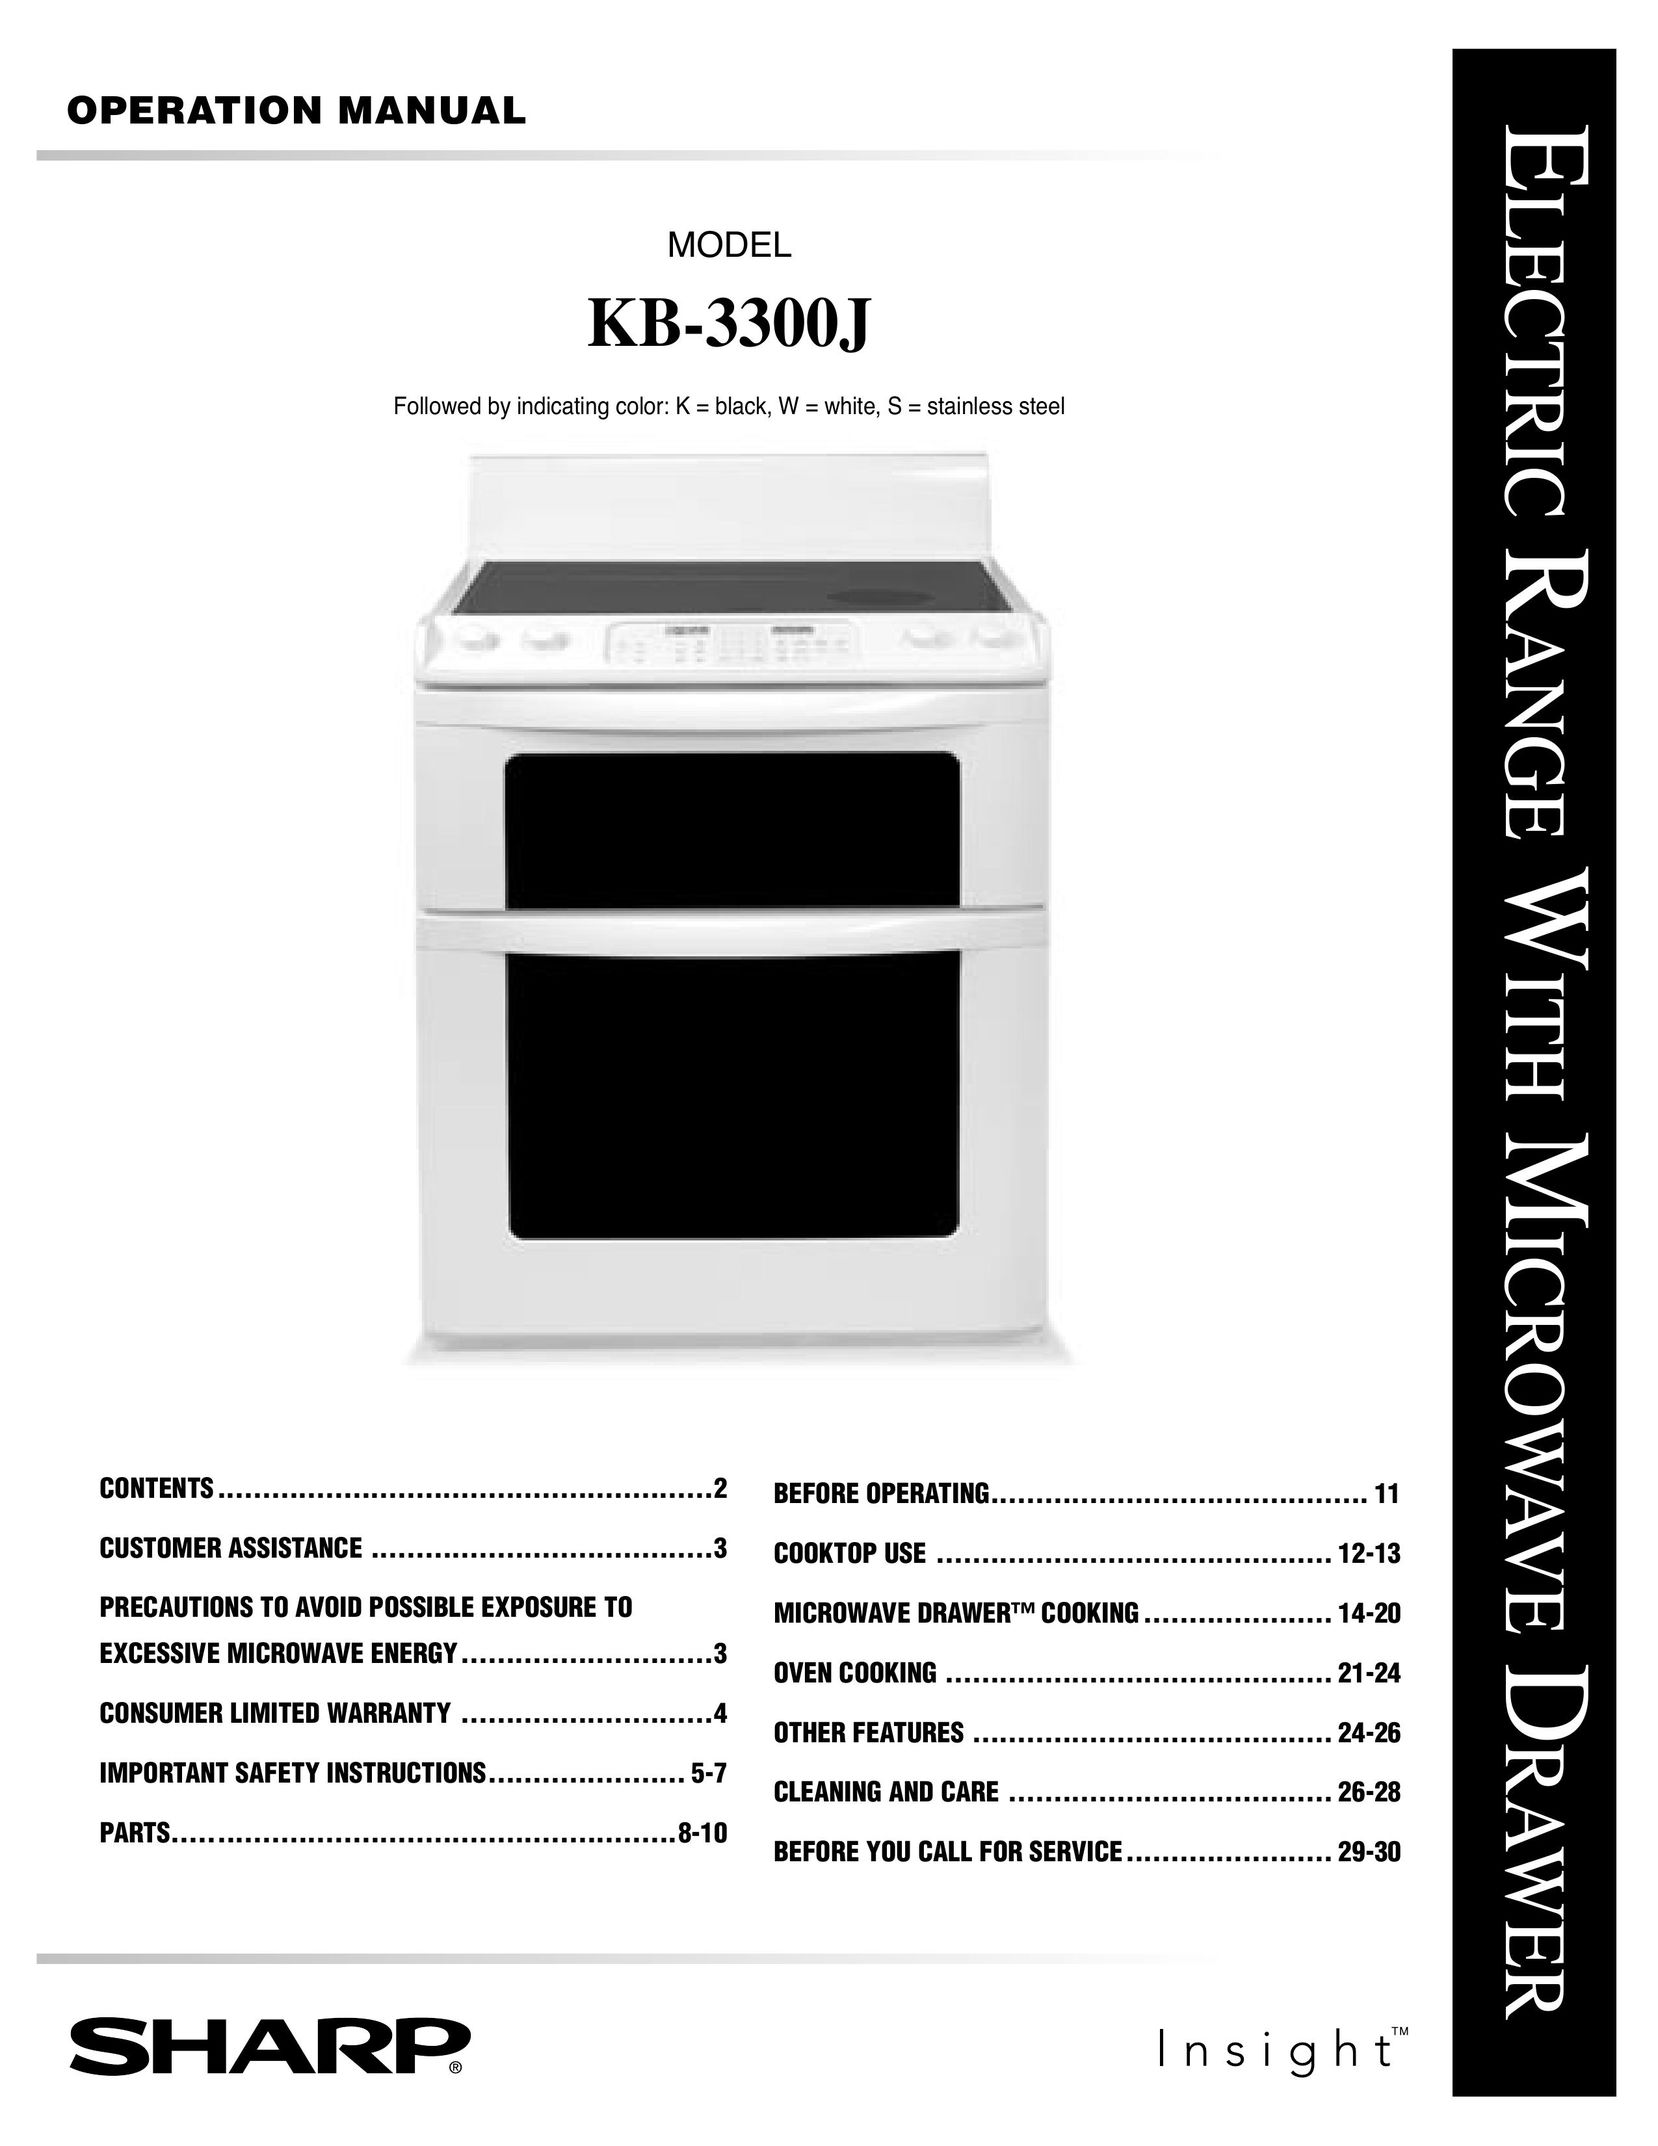 Sharp KB-3300JS Range User Manual